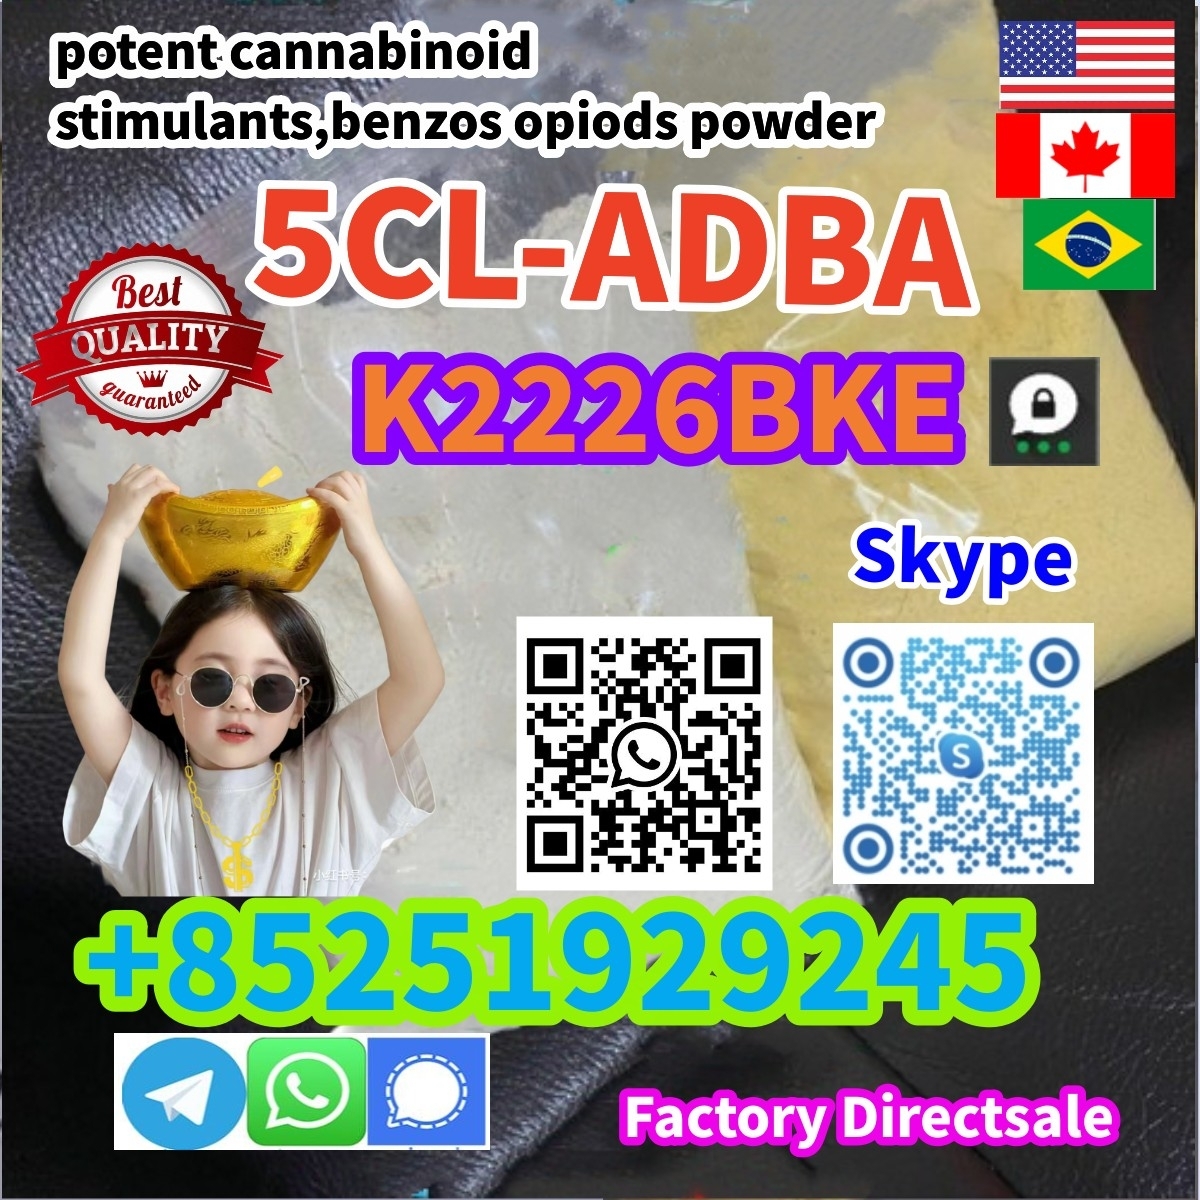 5cladba,5cl-adba 5CL-ADBA,4FADB 5CL-ADBA Strong EFFECT Original+85251929245 5cladba,5cl-adba 5CL-ADBA,4FADB 5CL-ADBA Precursor HOT Selling5cladba +85251929245-1 24-04-03